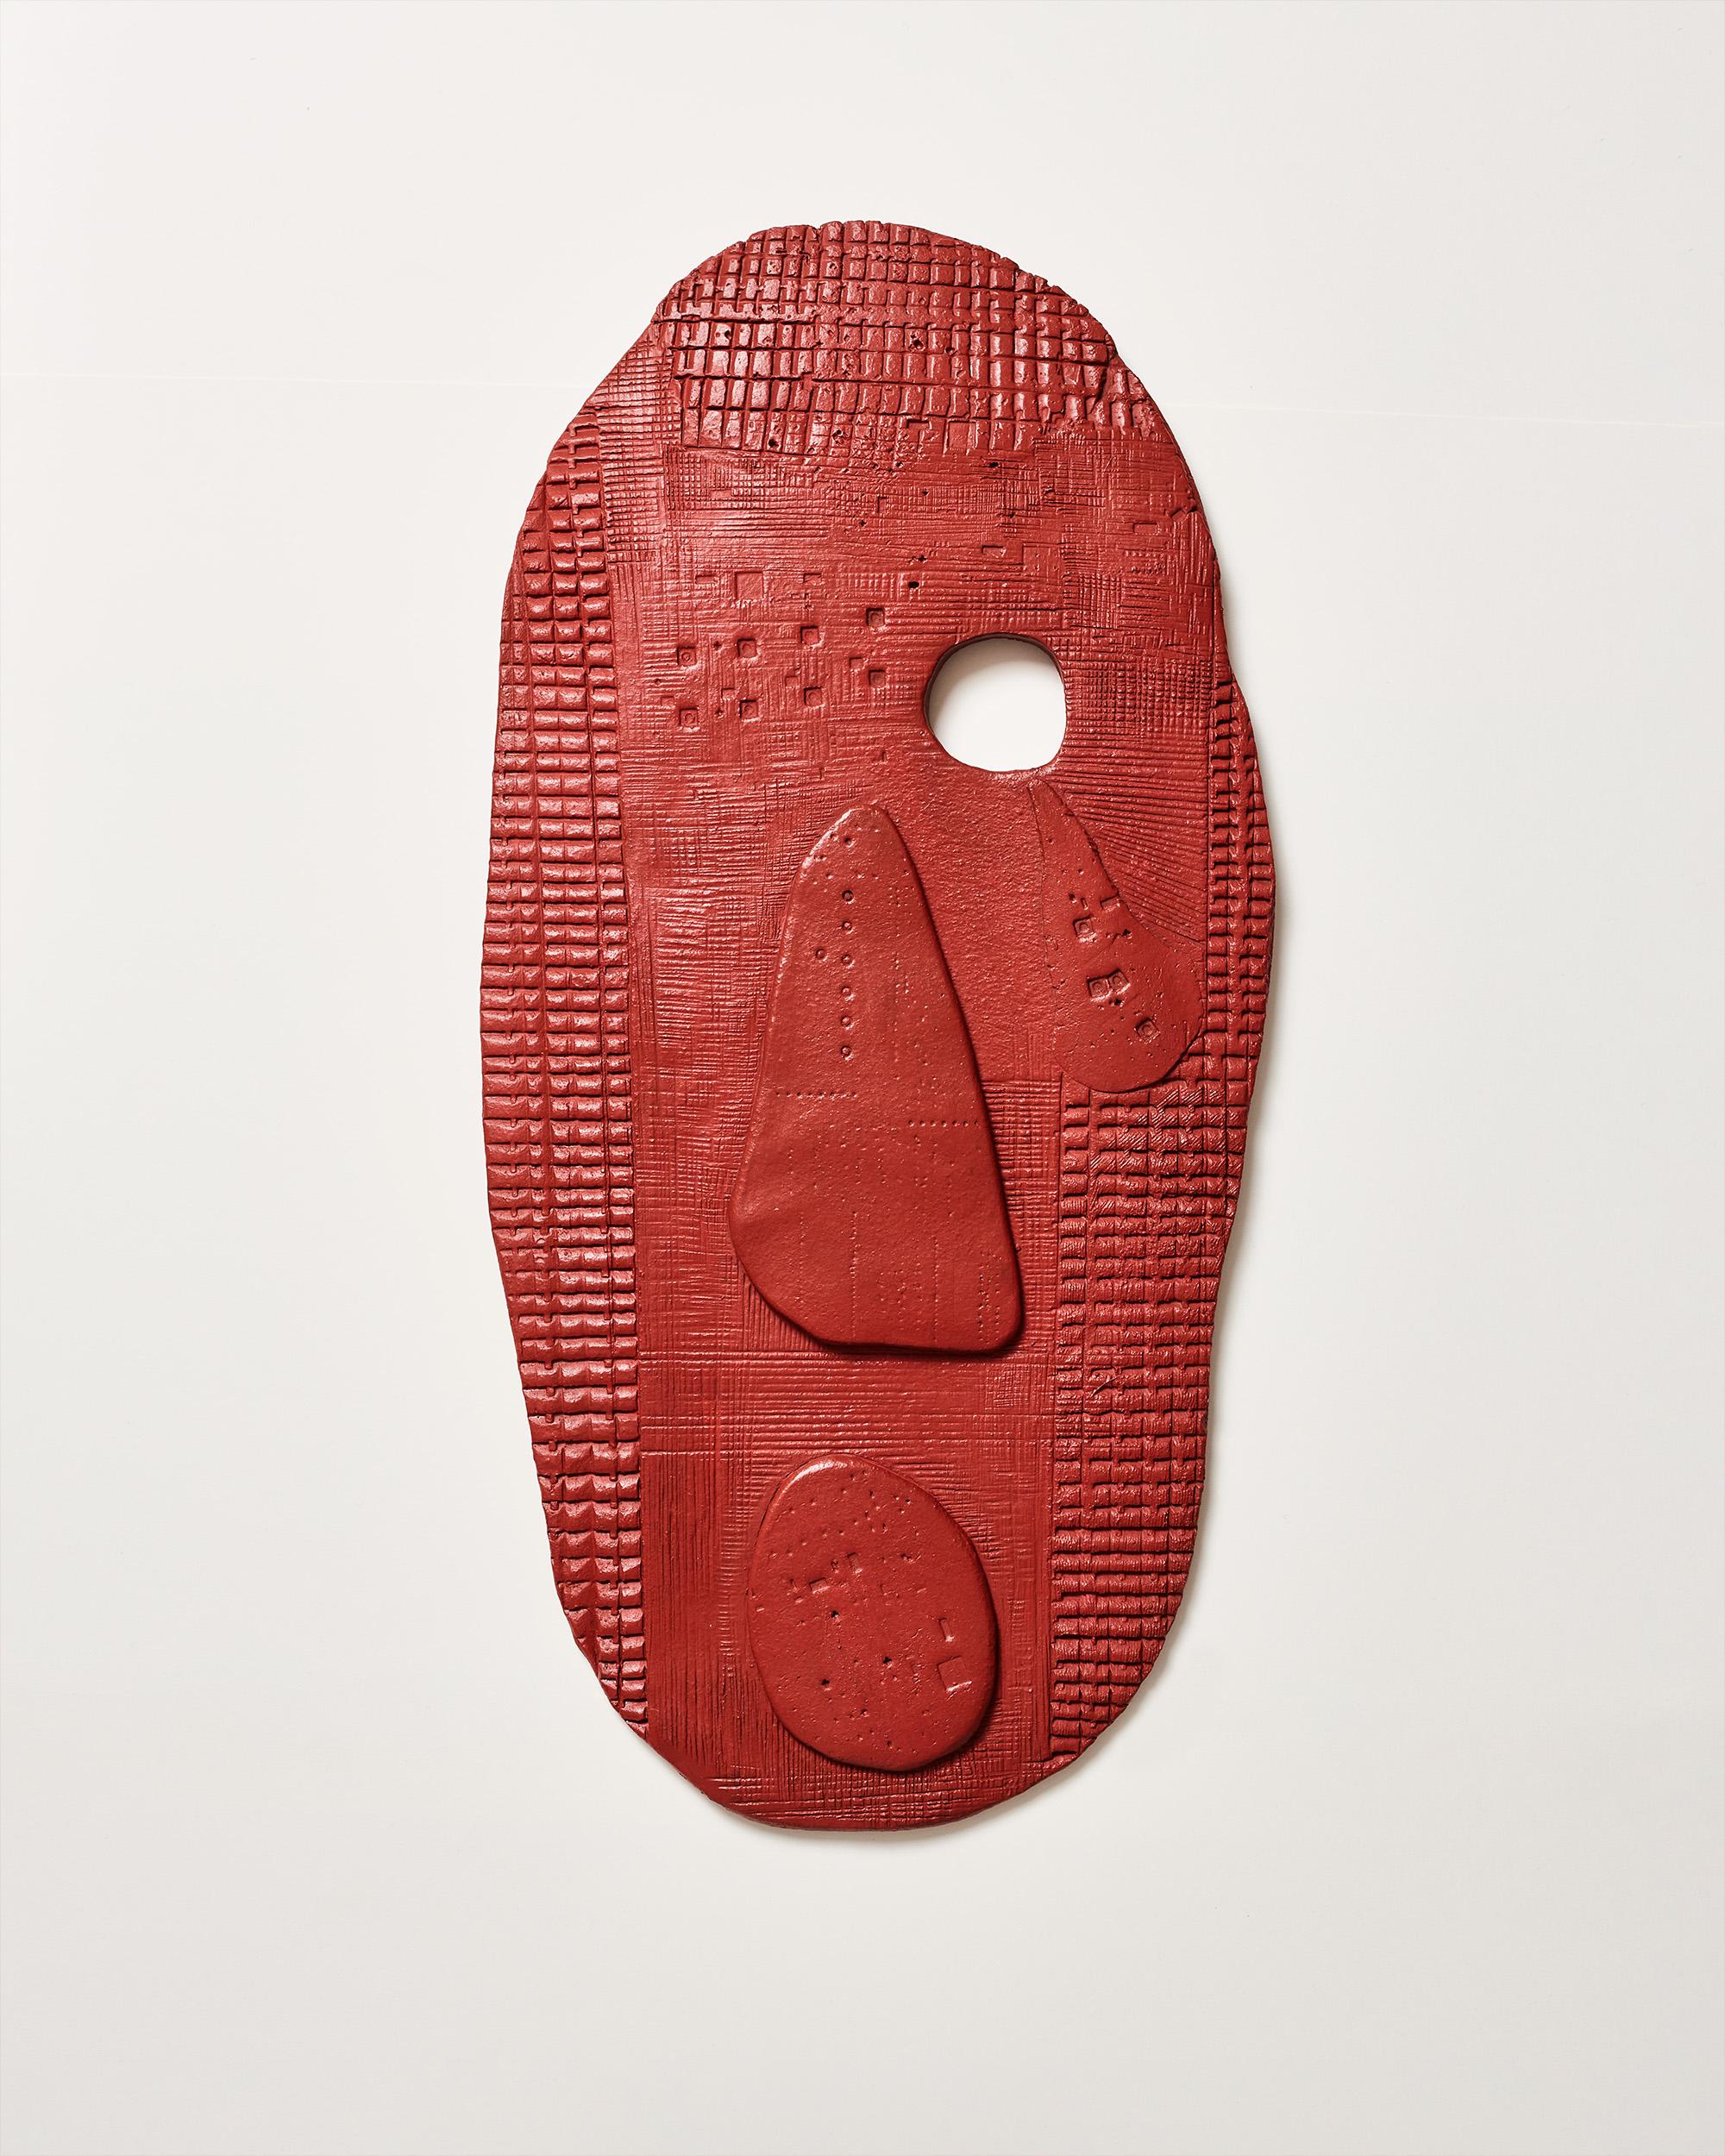 Larme de vigilant - Contemporary Ceramic Portrait Sculpture